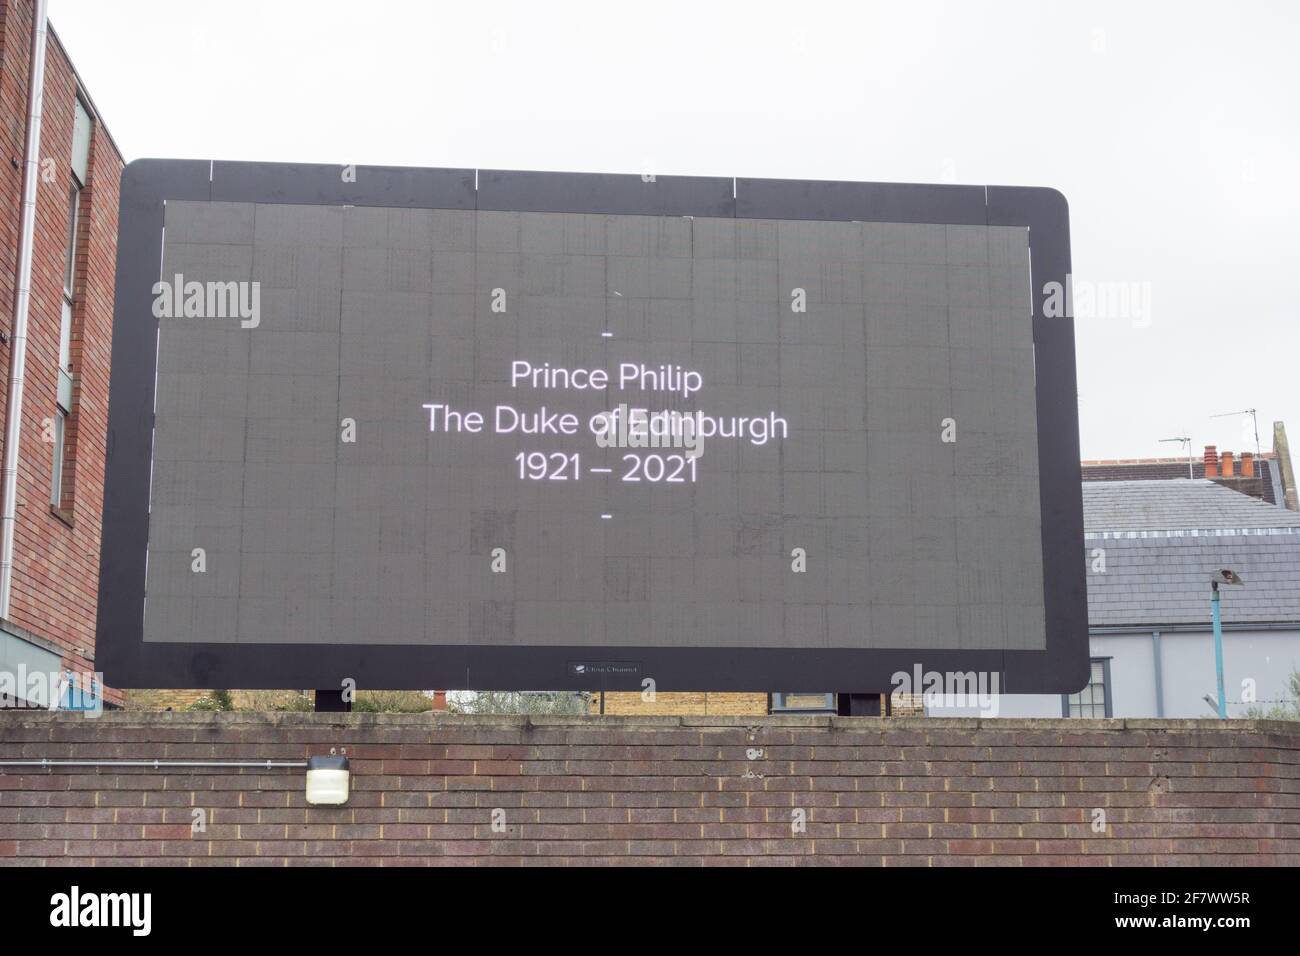 Prince Philip, Duke of Edinburgh, 1921-2021, cartel publicitario electrónico, Londres, Reino Unido Foto de stock